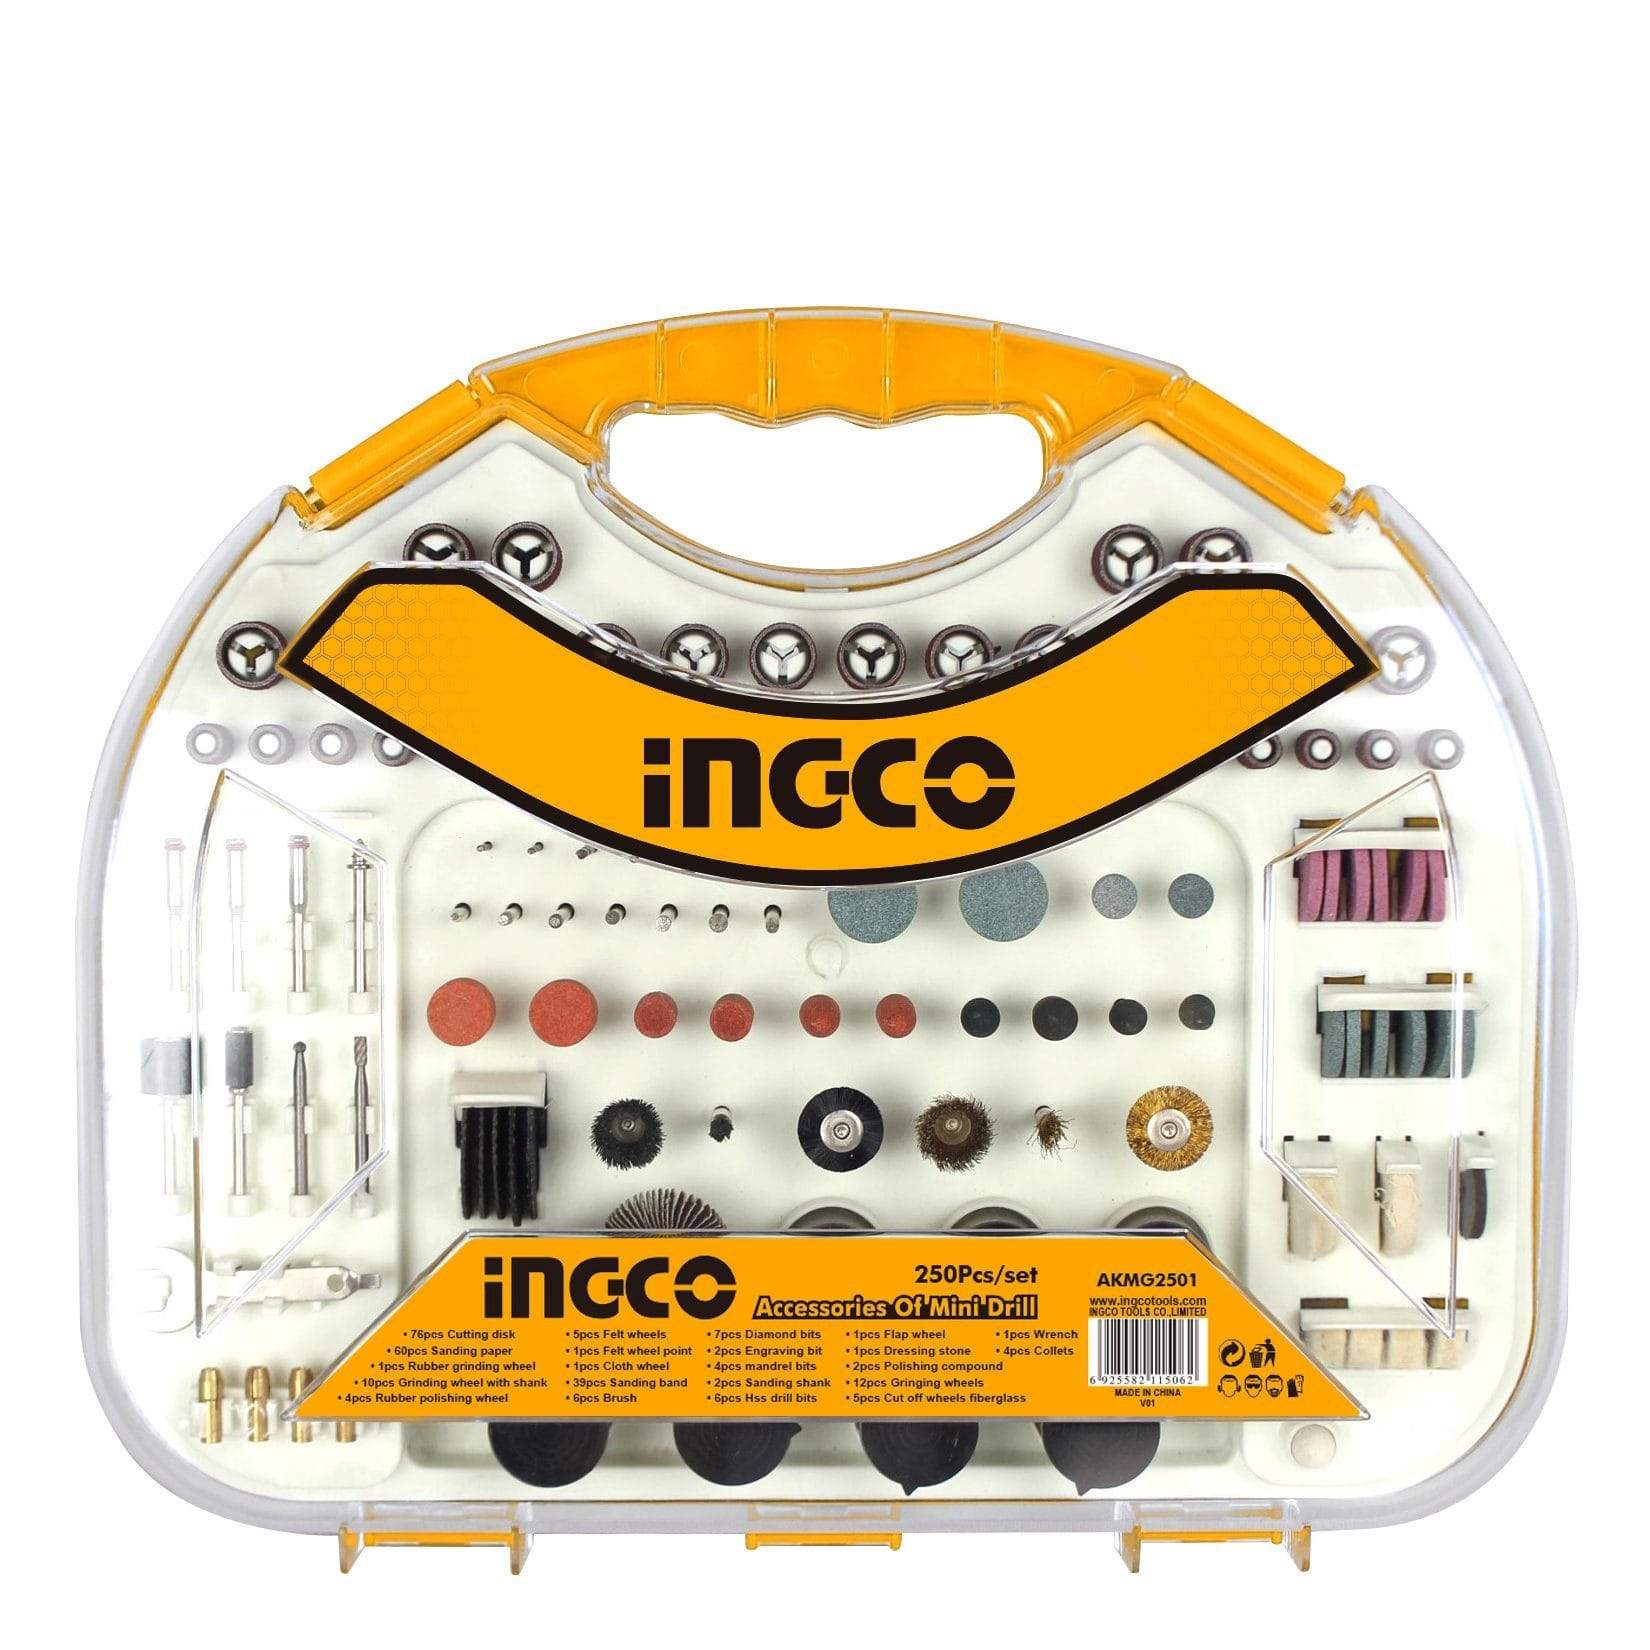 Ingco 250 Pieces Accessories of Mini Drill - AKMG2501 supply-master